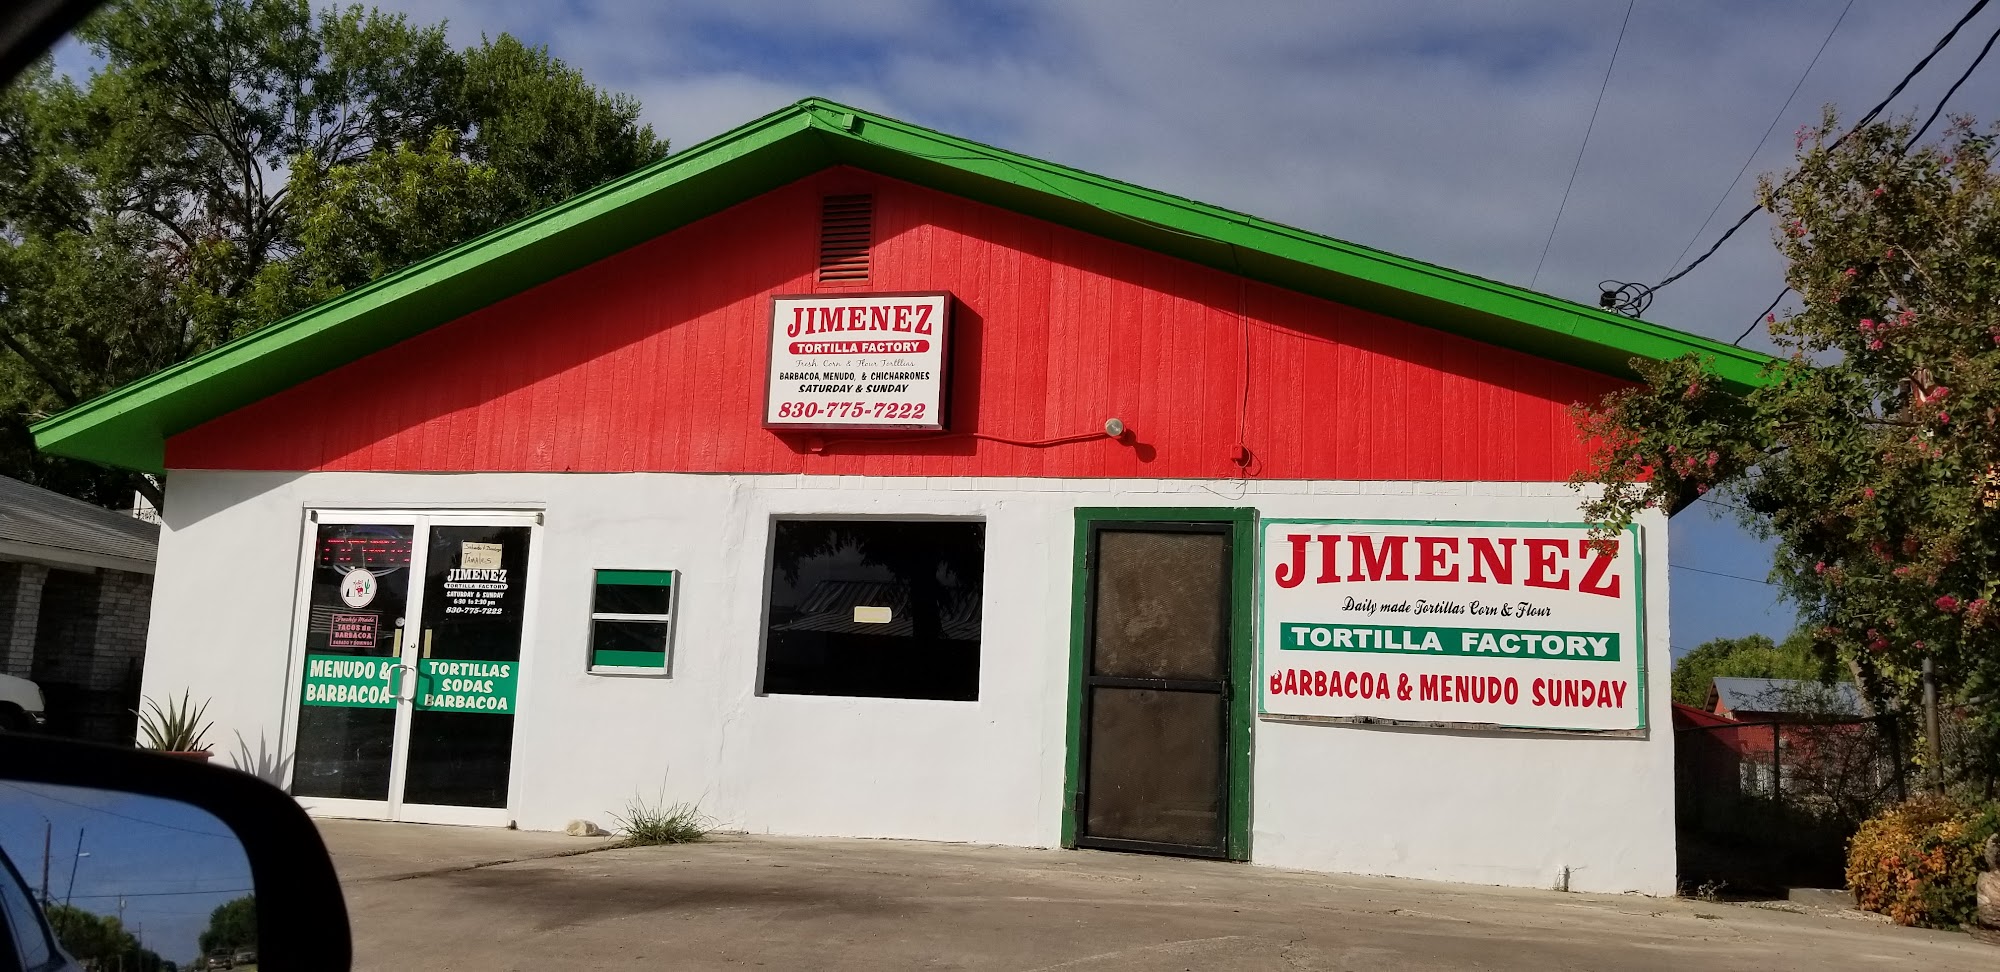 Jimenez Tortilla Factory